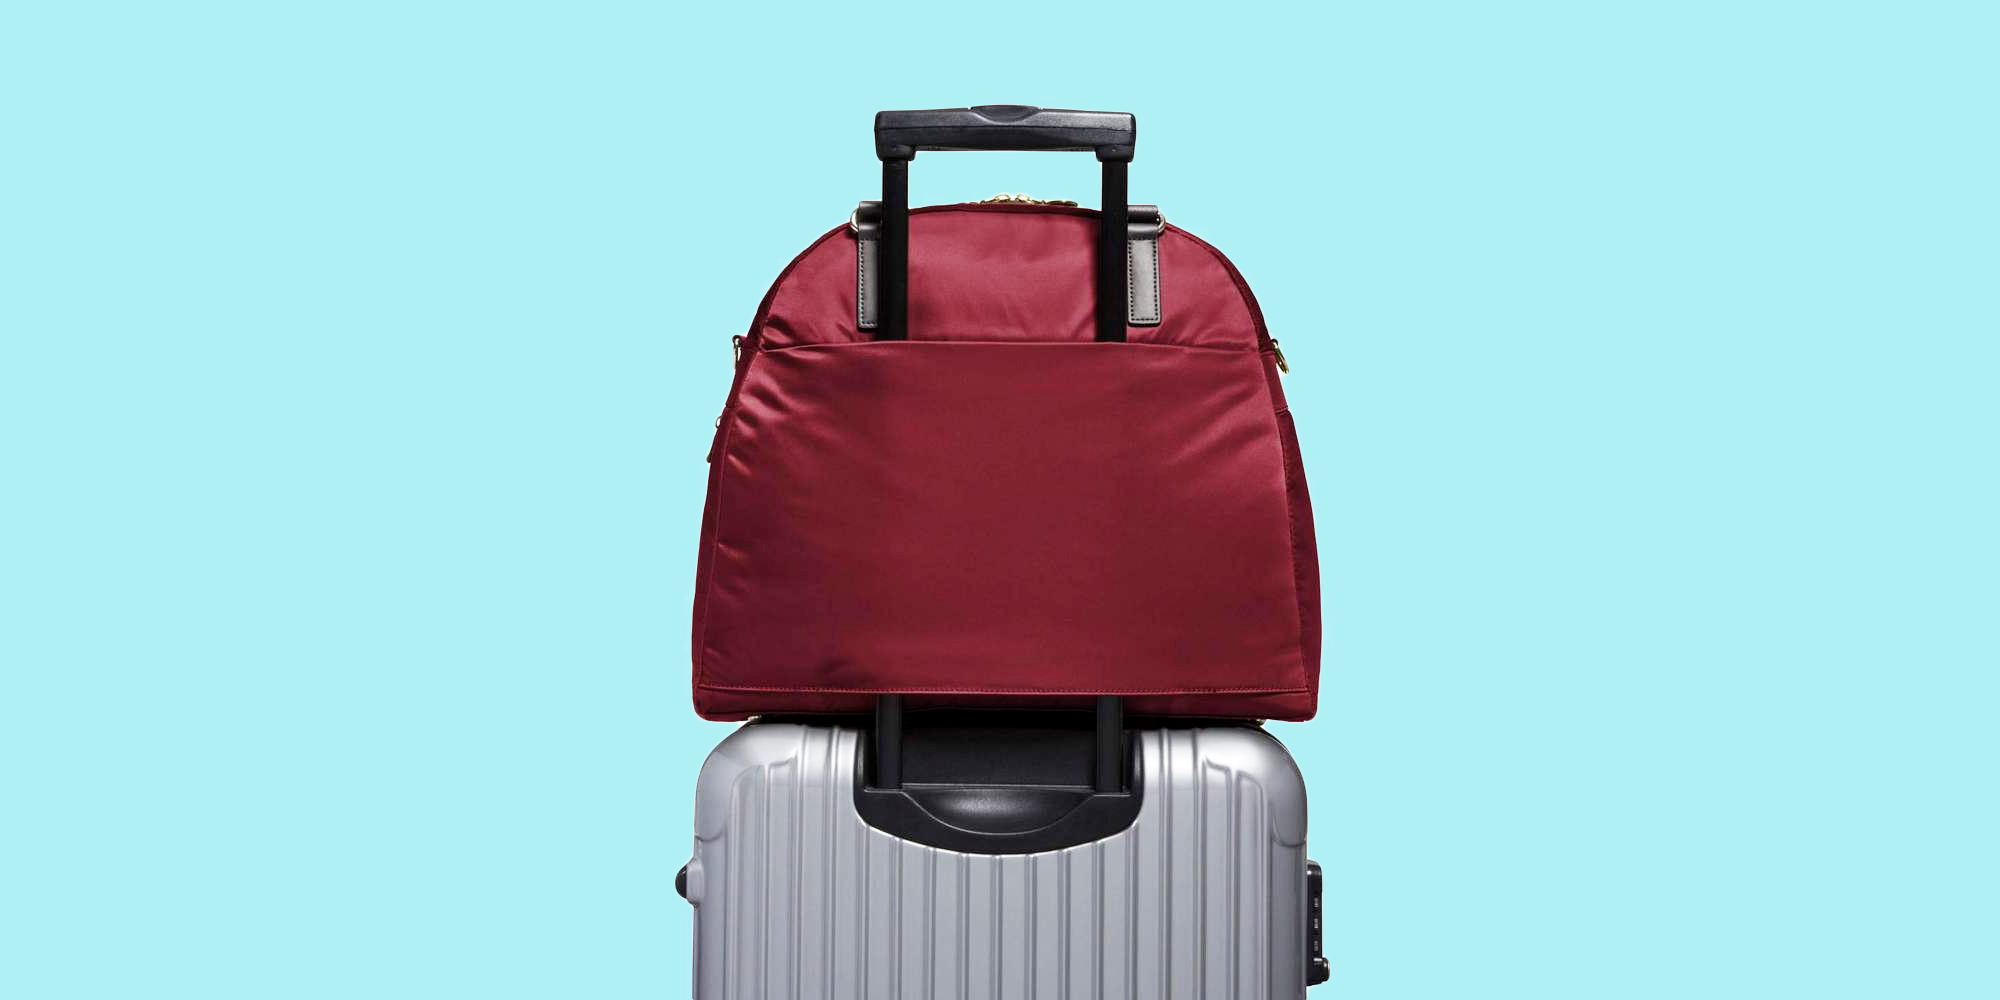 Underseat Luggage Bag Factory Sale - dainikhitnews.com 1692327067